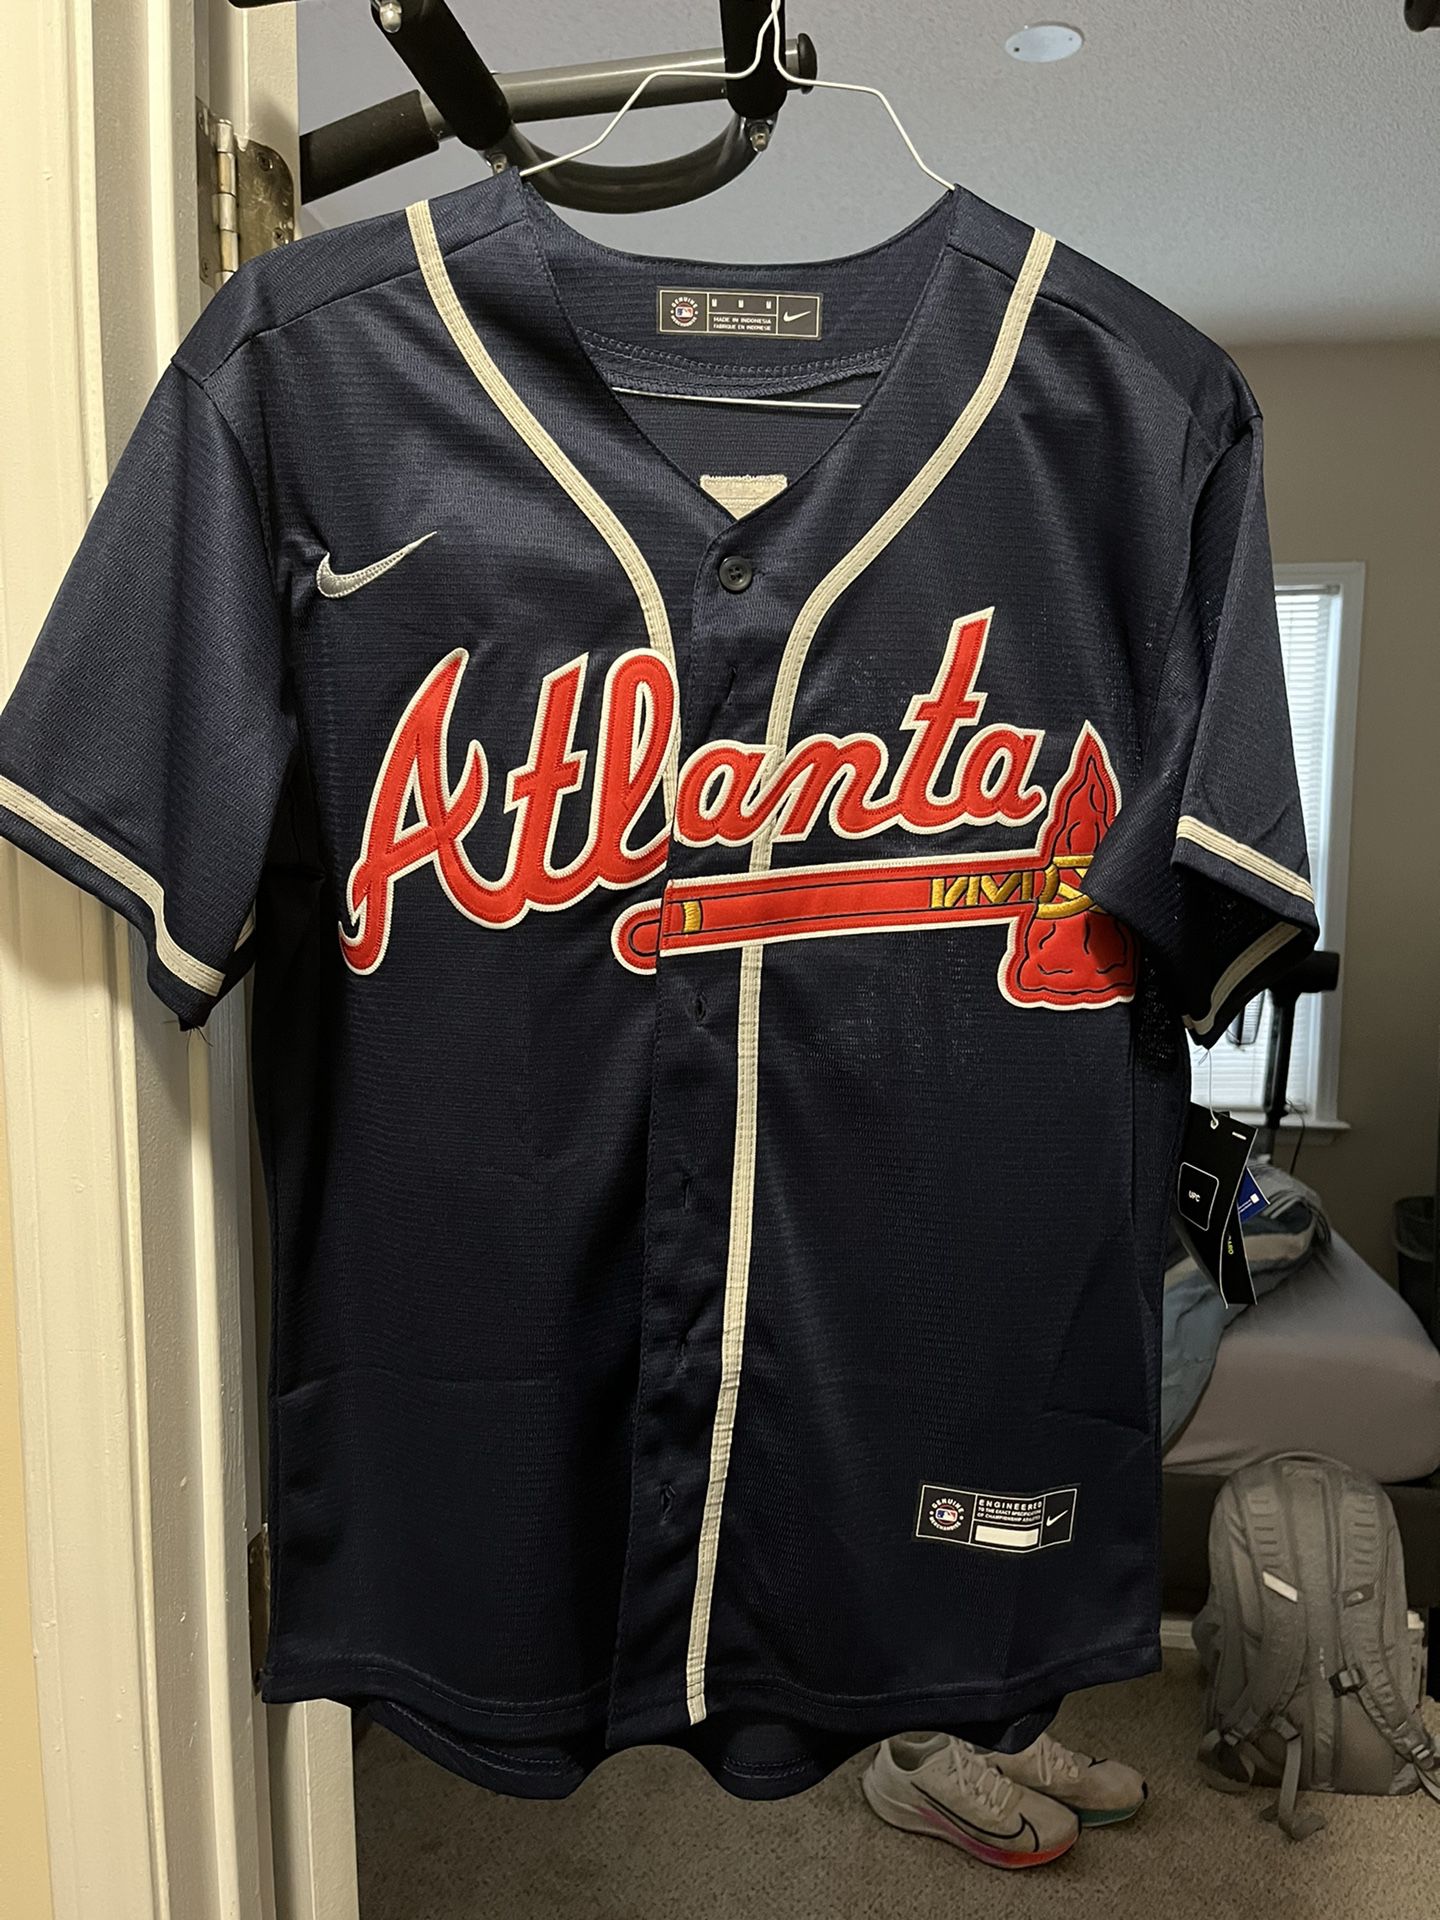 Atlanta Braves Authentic Freddie Freeman Jersey for Sale in Atlanta